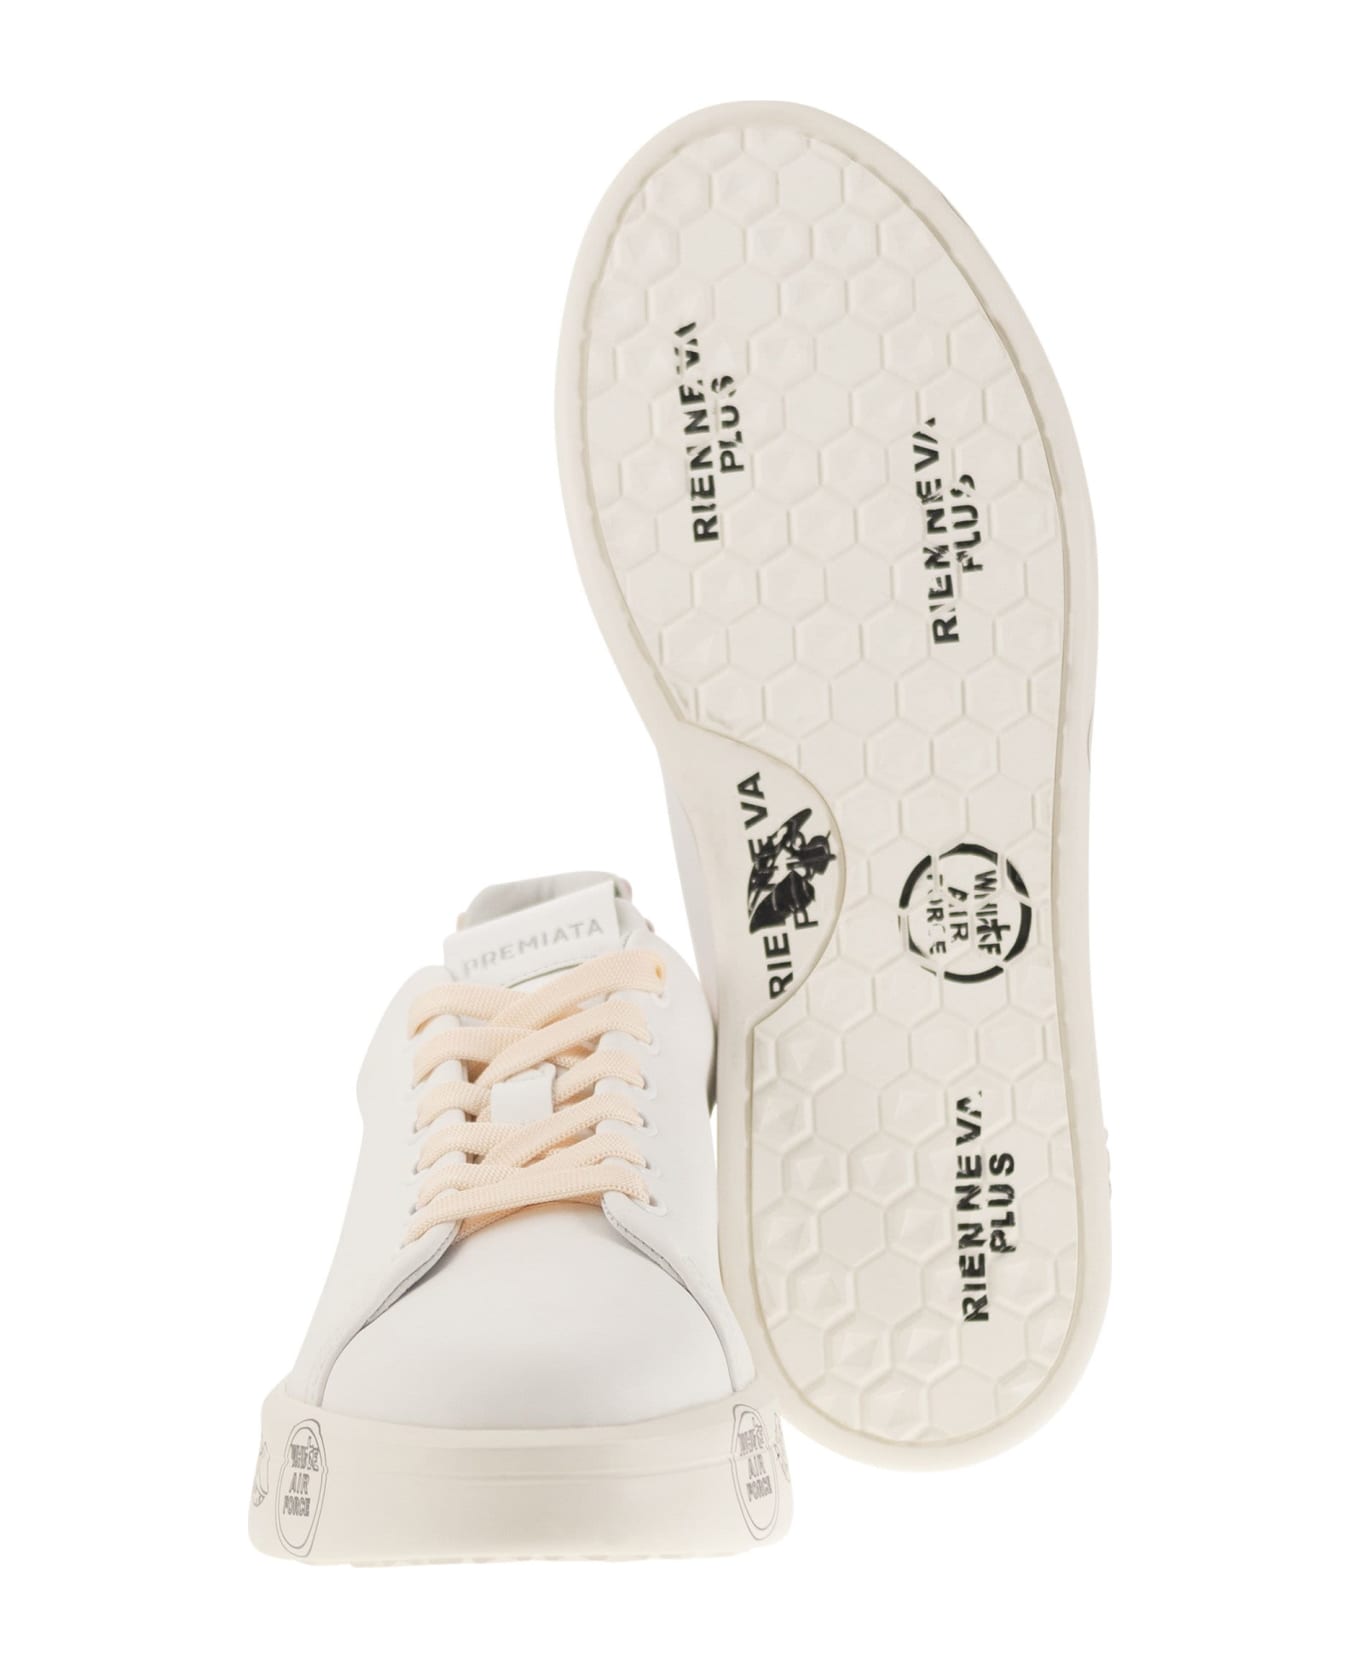 Premiata Belle 6709 Sneakers - White